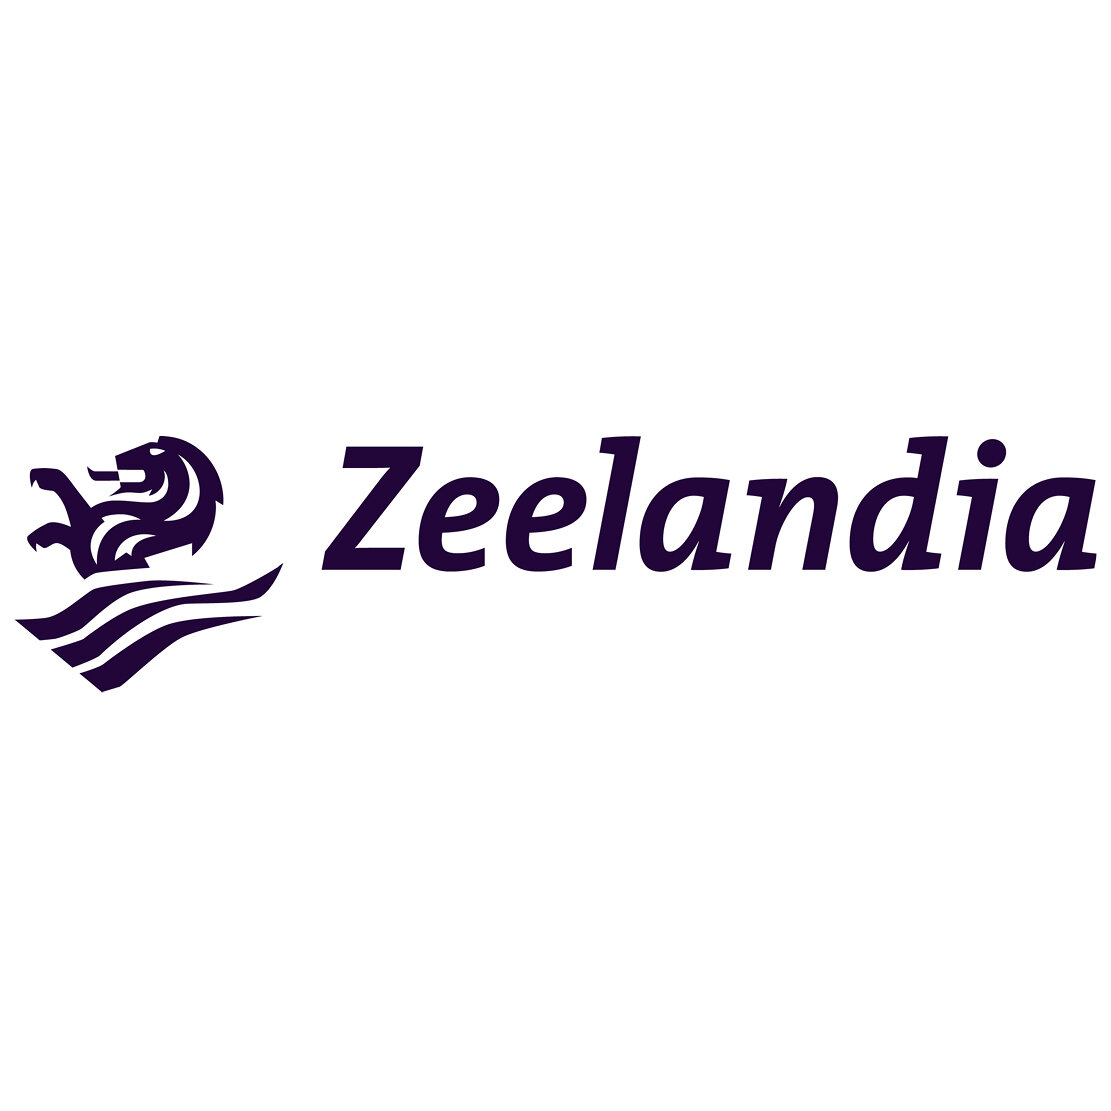 logo-zeelandia-1024x270.jpg